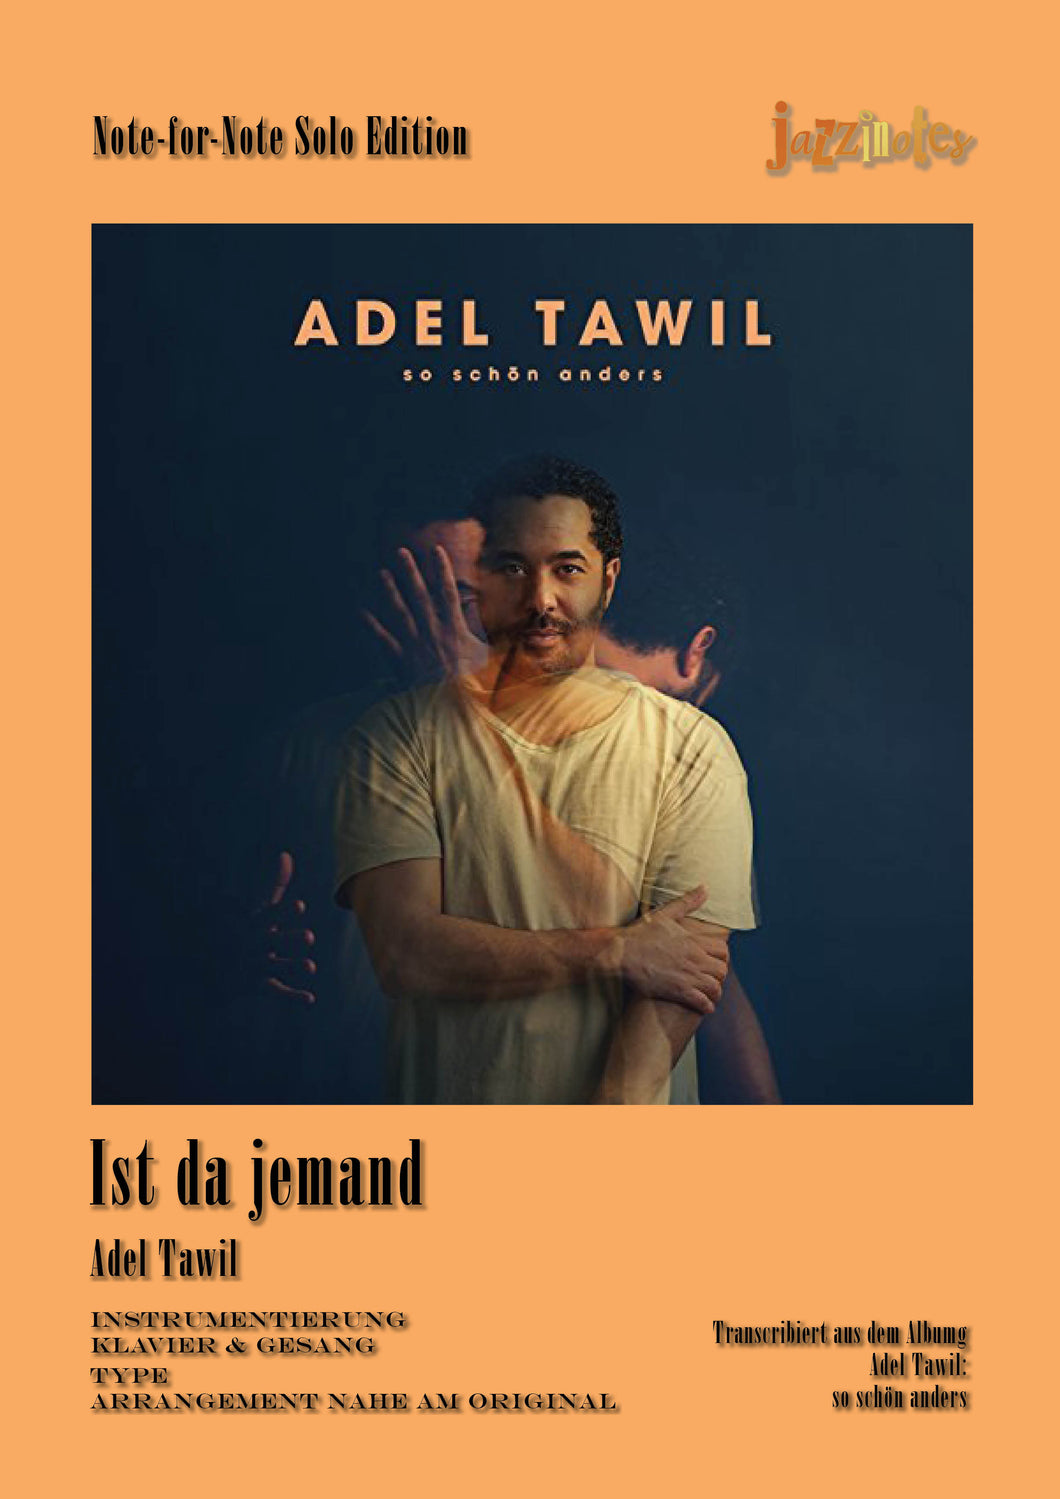 Tawil, Adel: Ist da jemand - Sheet Music Download